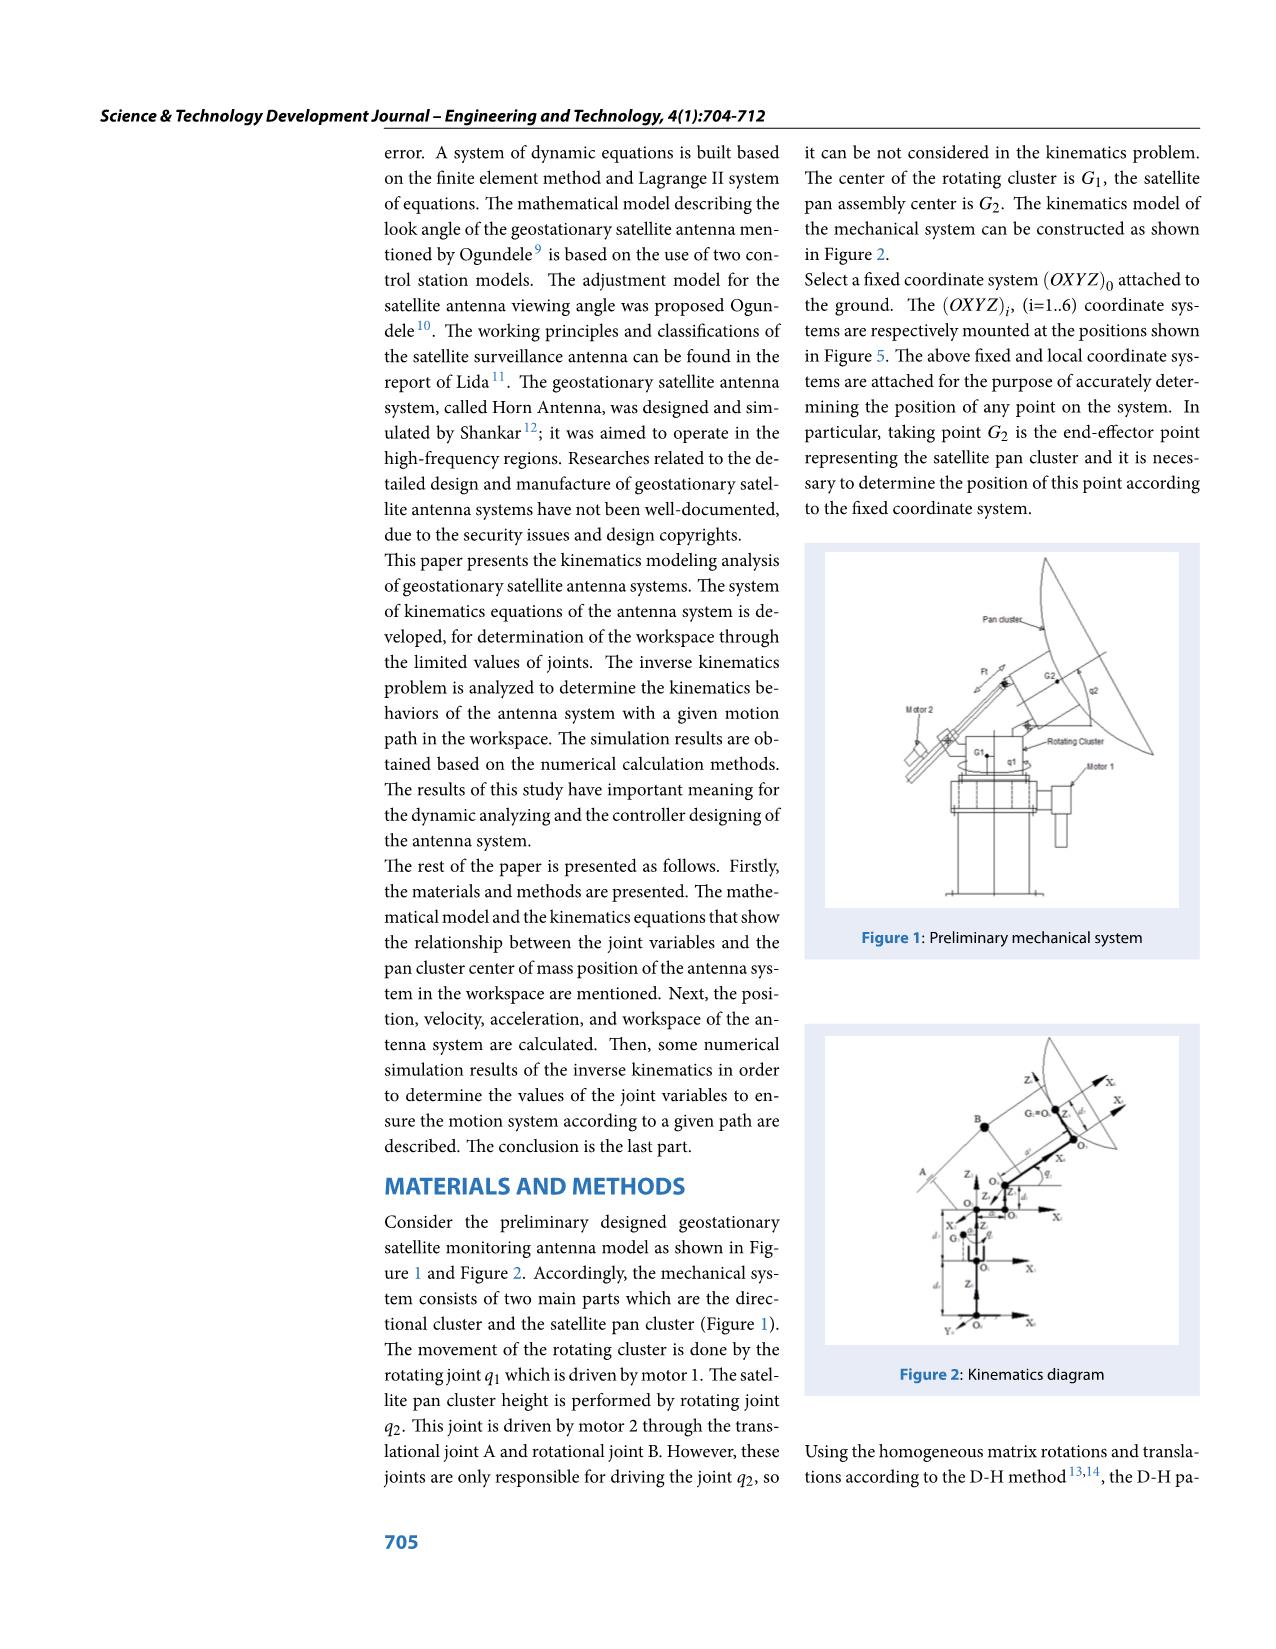 Kinematics modeling analysis of the geostationary satellite monitoring antenna system trang 2